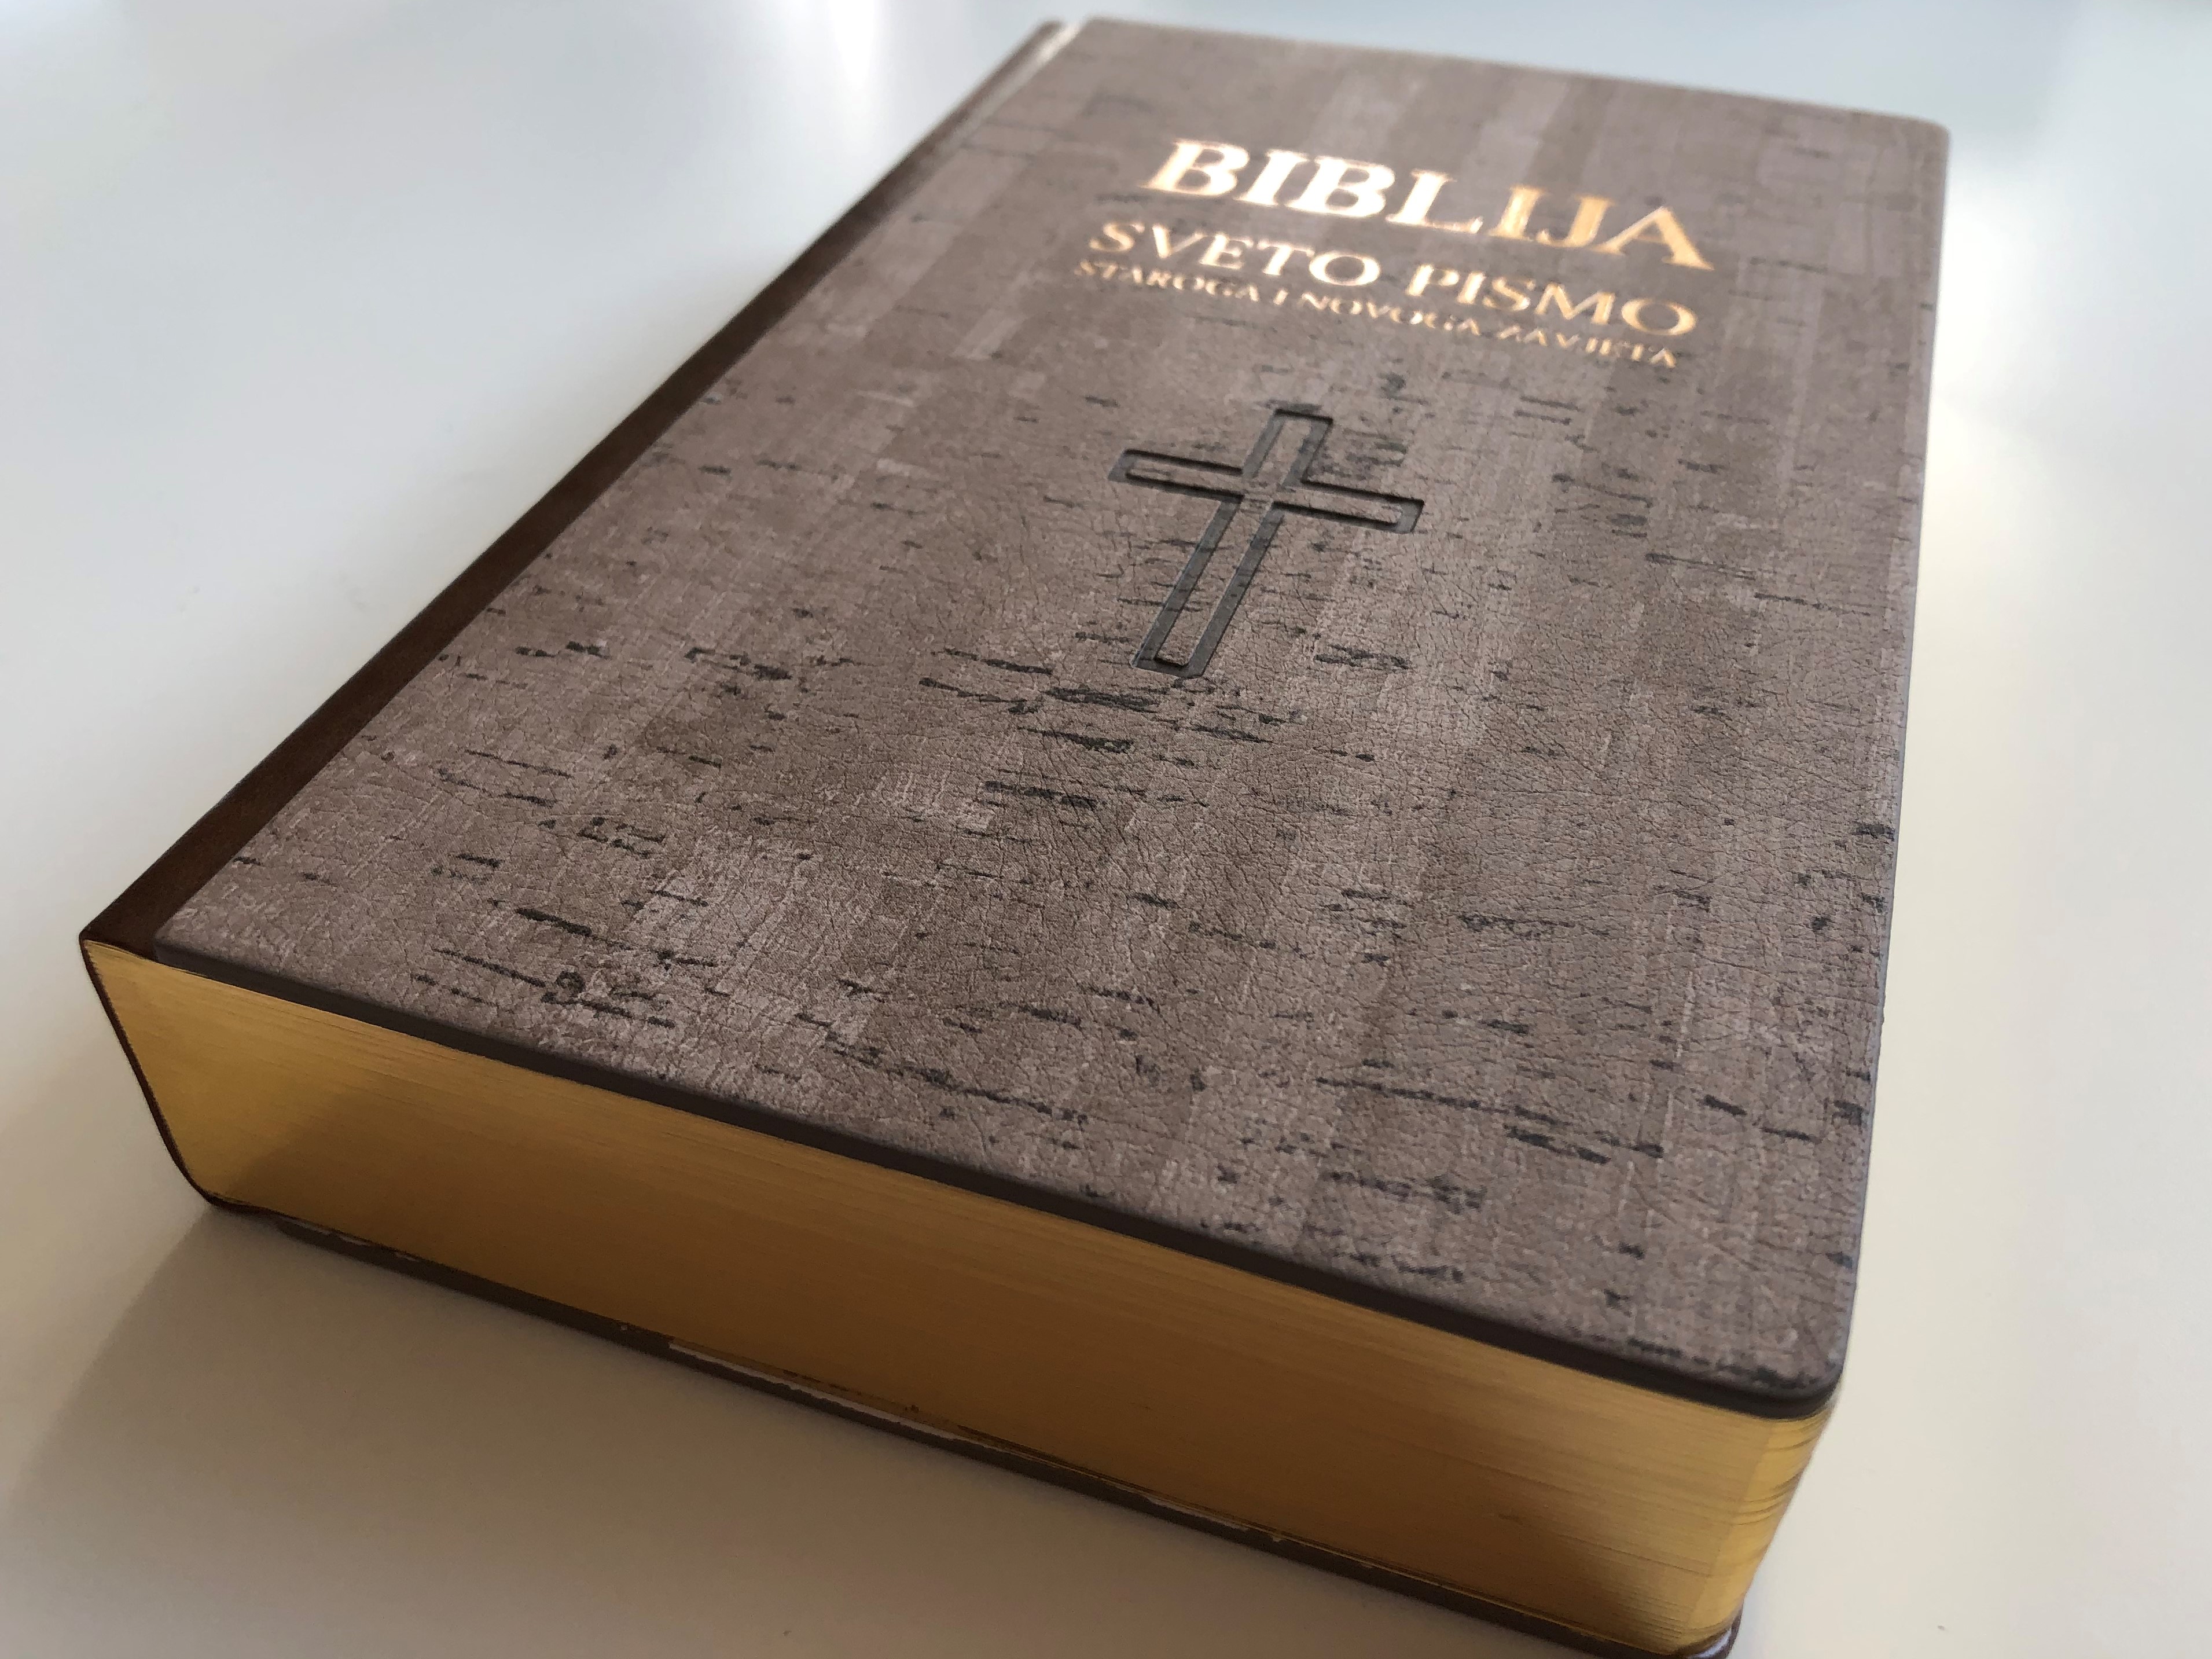 croatian-holy-bible-wood-cutout-hardcover-golden-edges-deuterocanonical-apocrypha-3.jpg